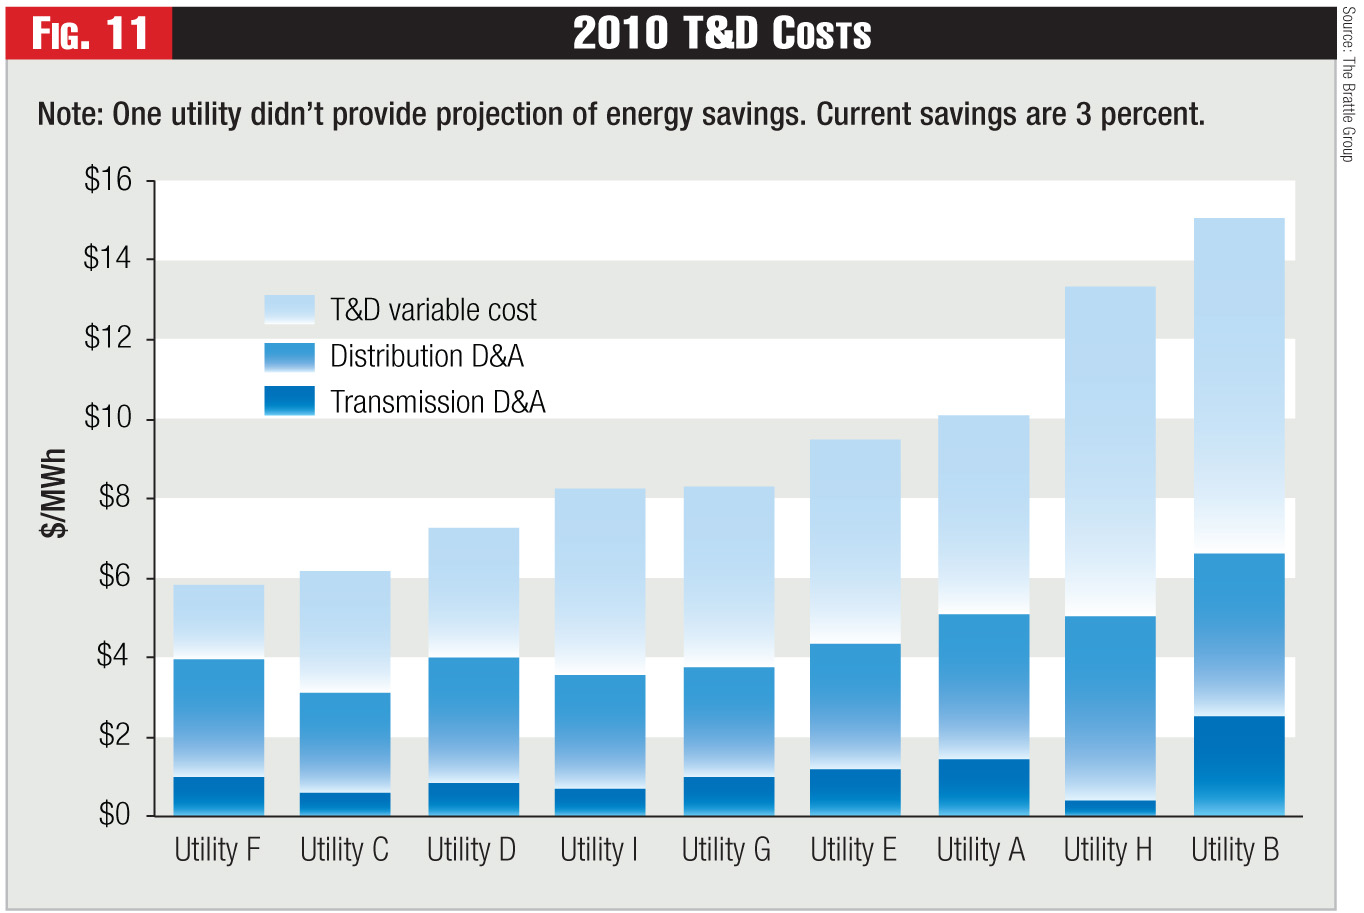 Figure 11 - 2010 T&D Costs